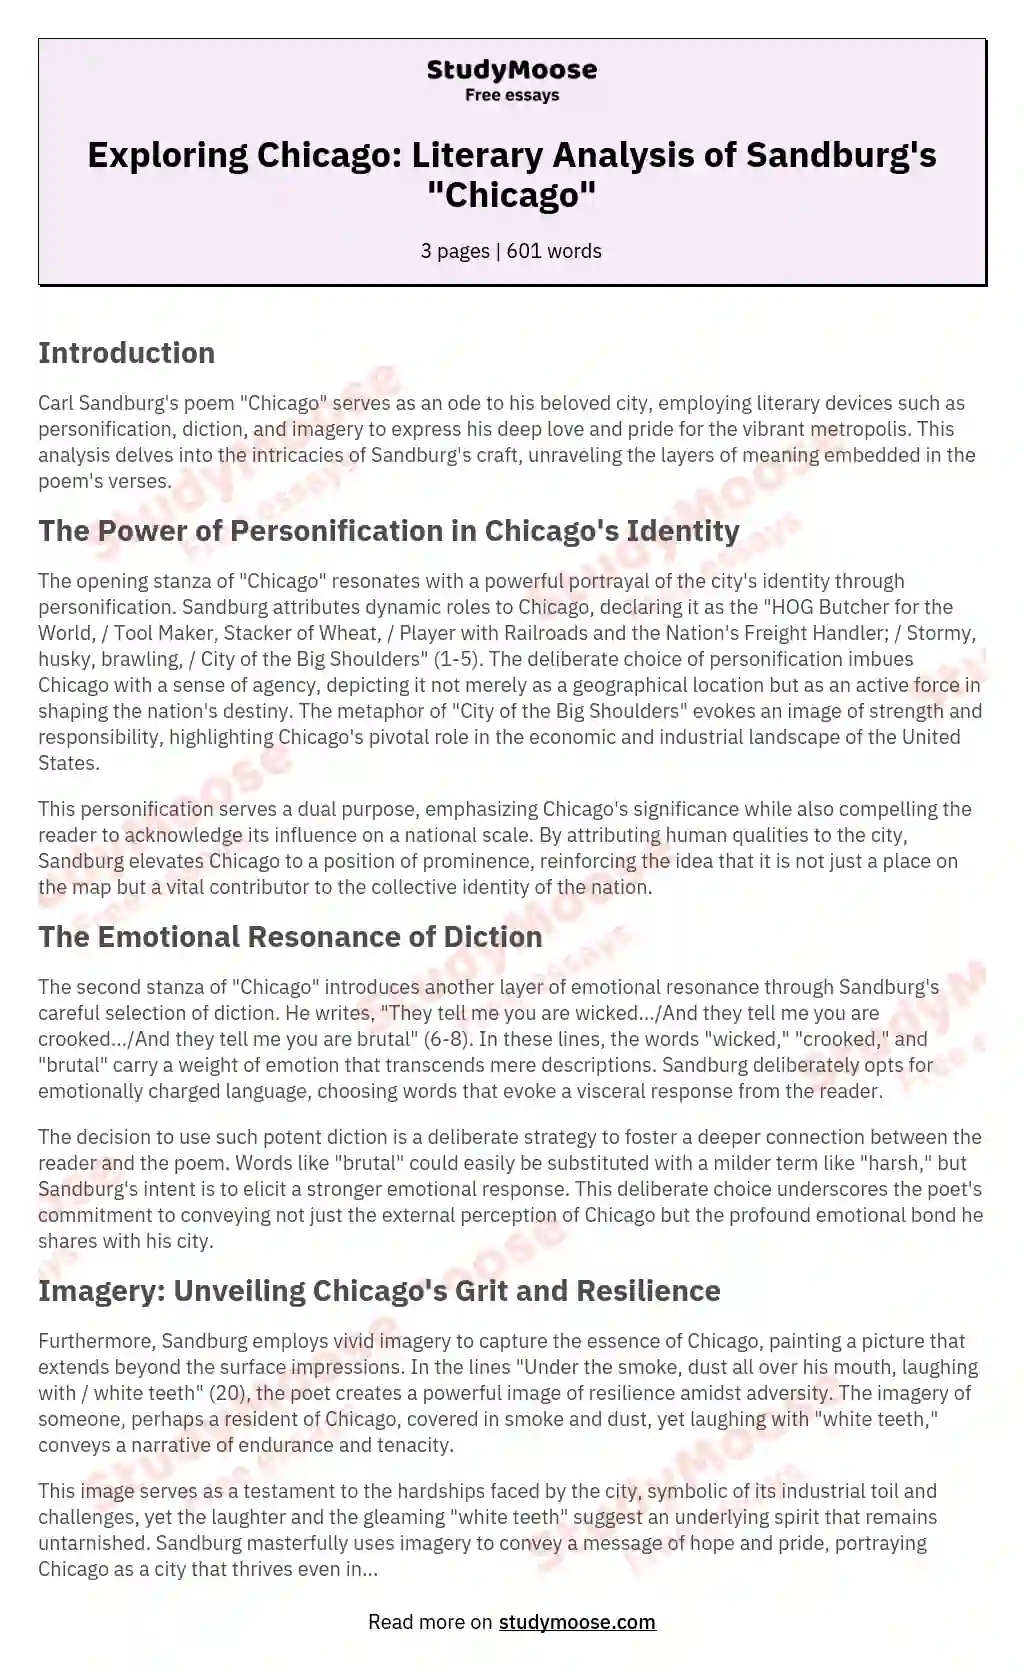 Exploring Chicago: Literary Analysis of Sandburg's "Chicago"